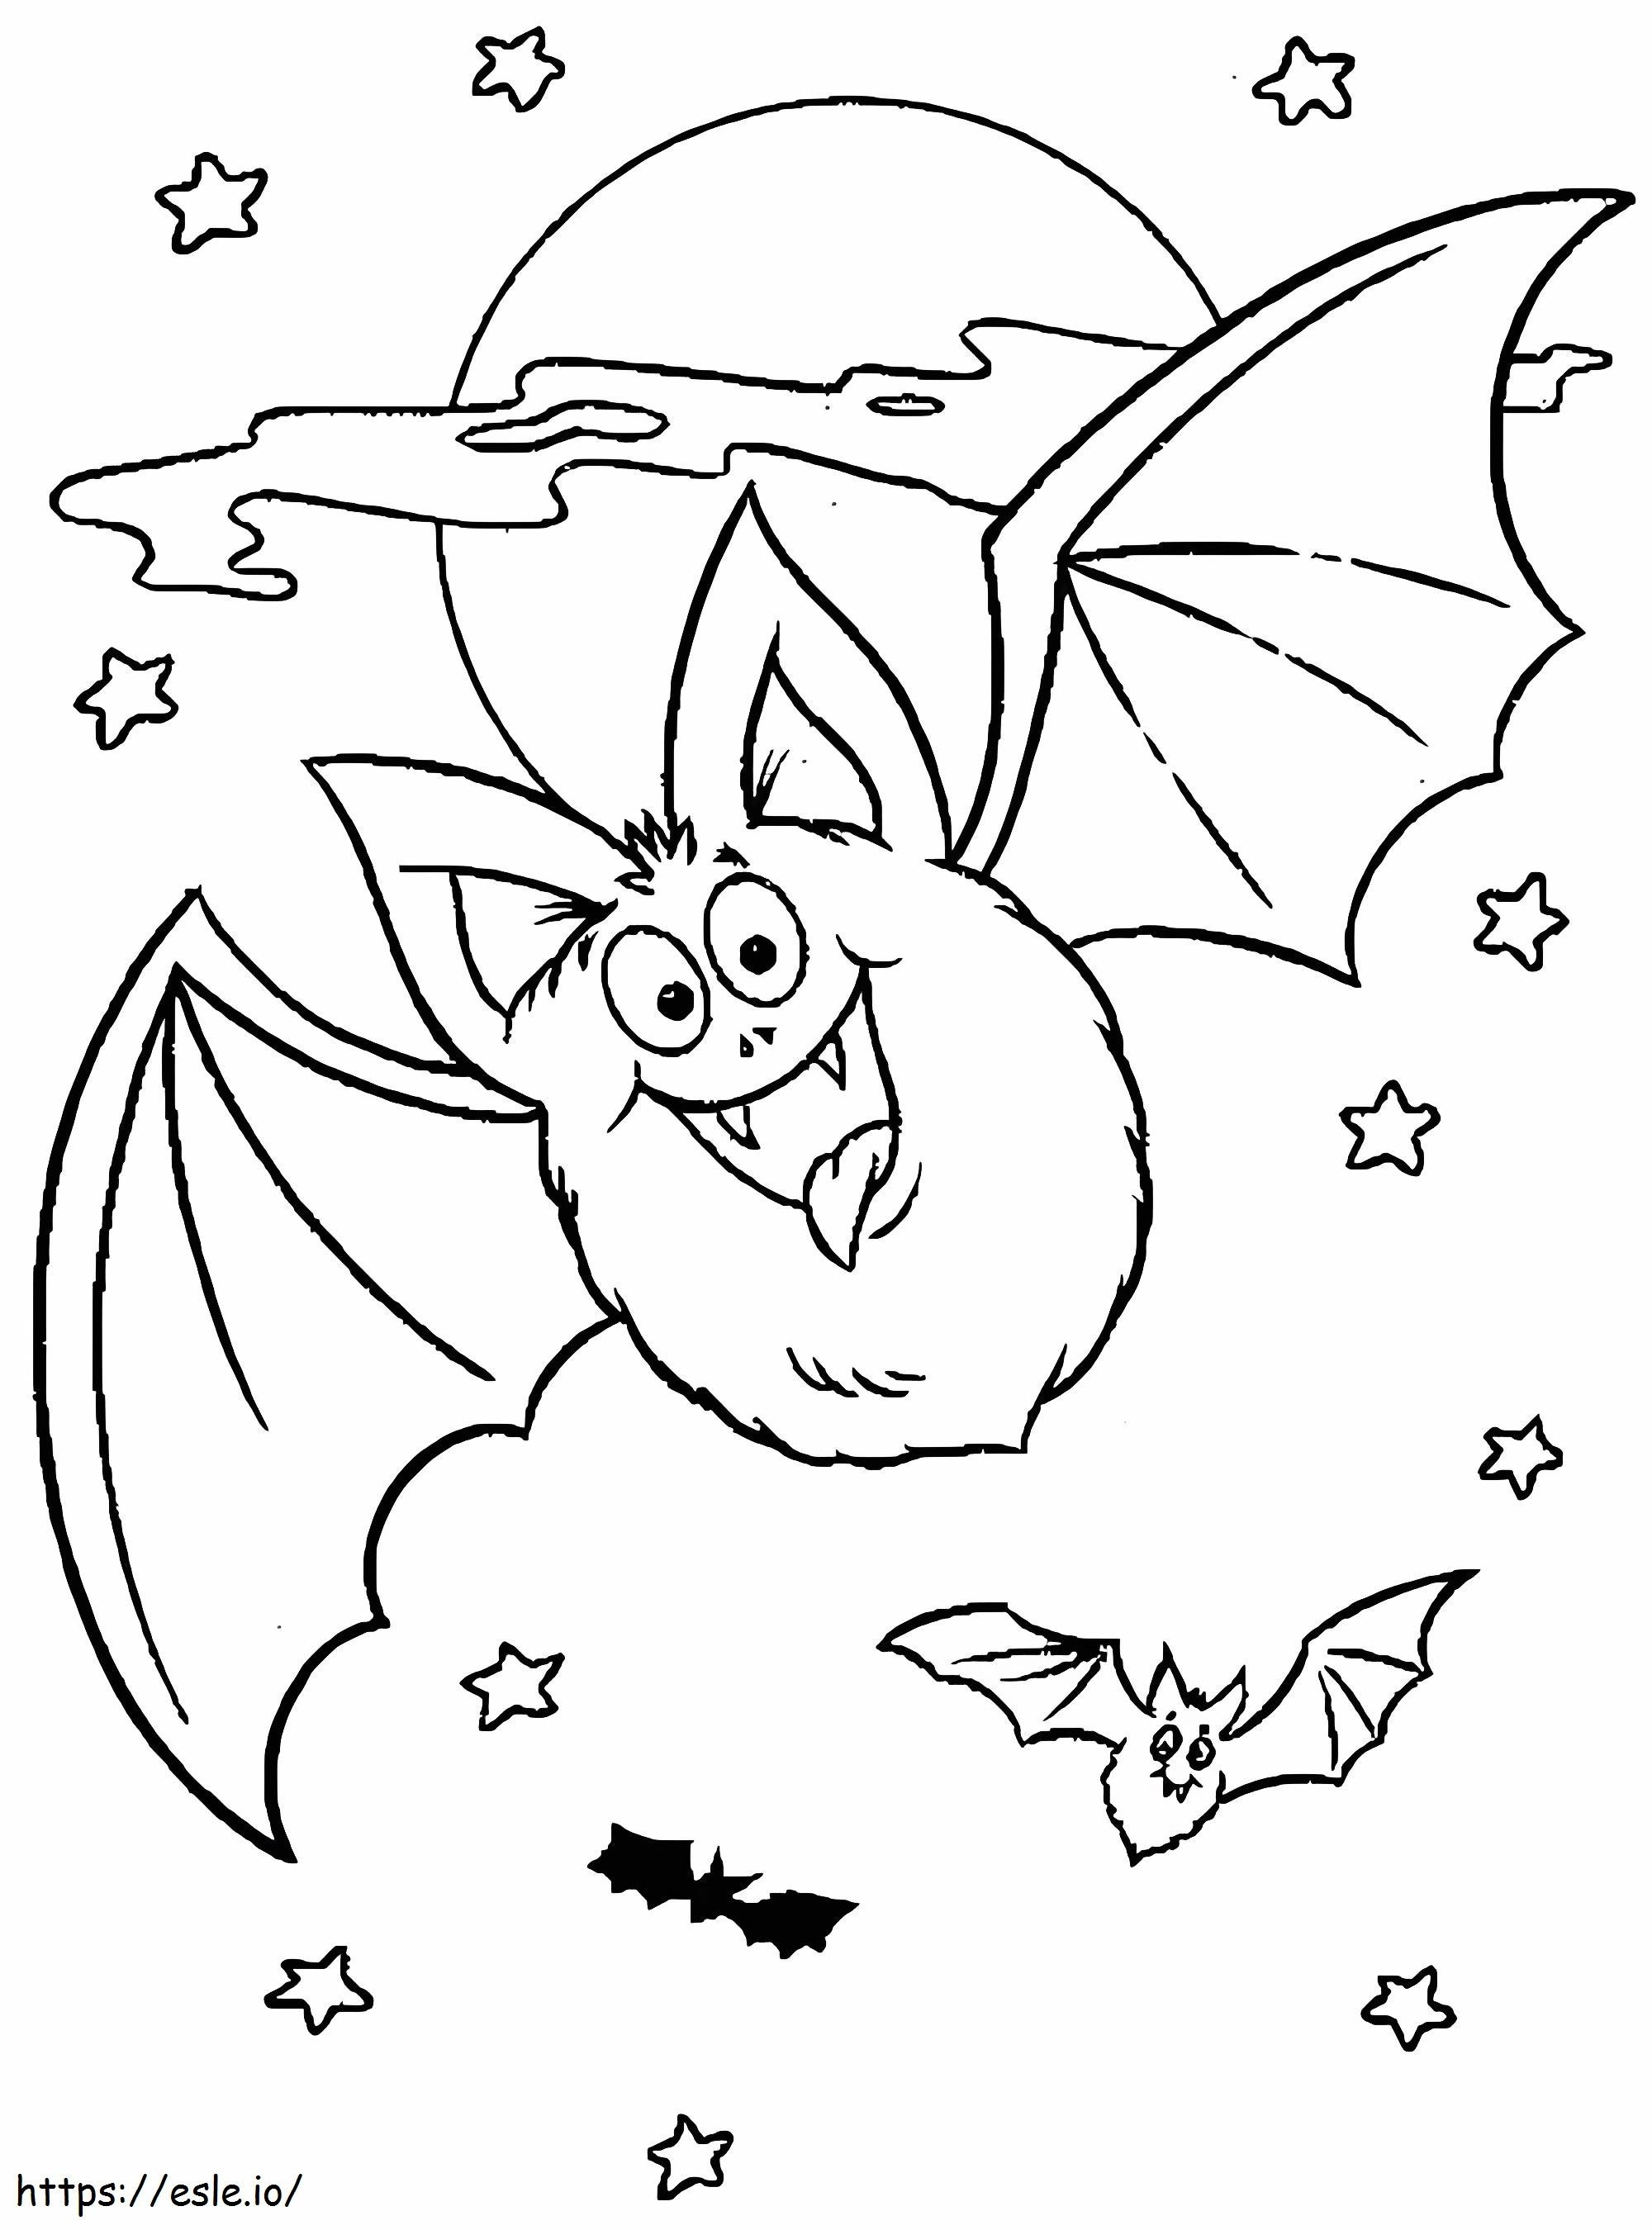 1539677065 21 New Bat Free Ideas Of Frankenstein Of Frankenstein coloring page